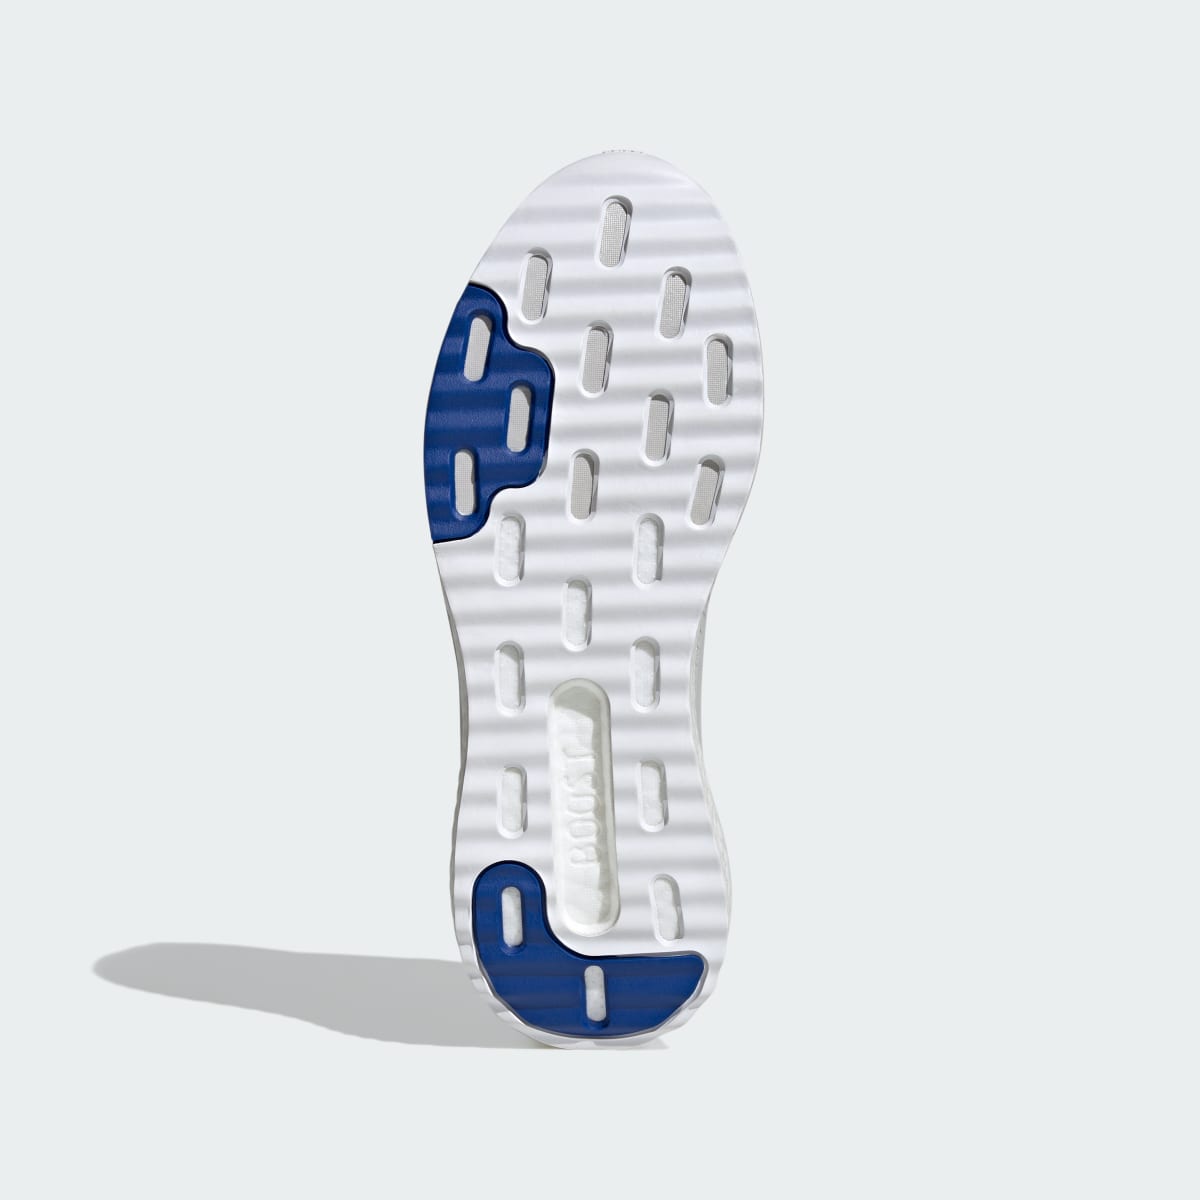 Adidas X_PLRPHASE Schuh. 5